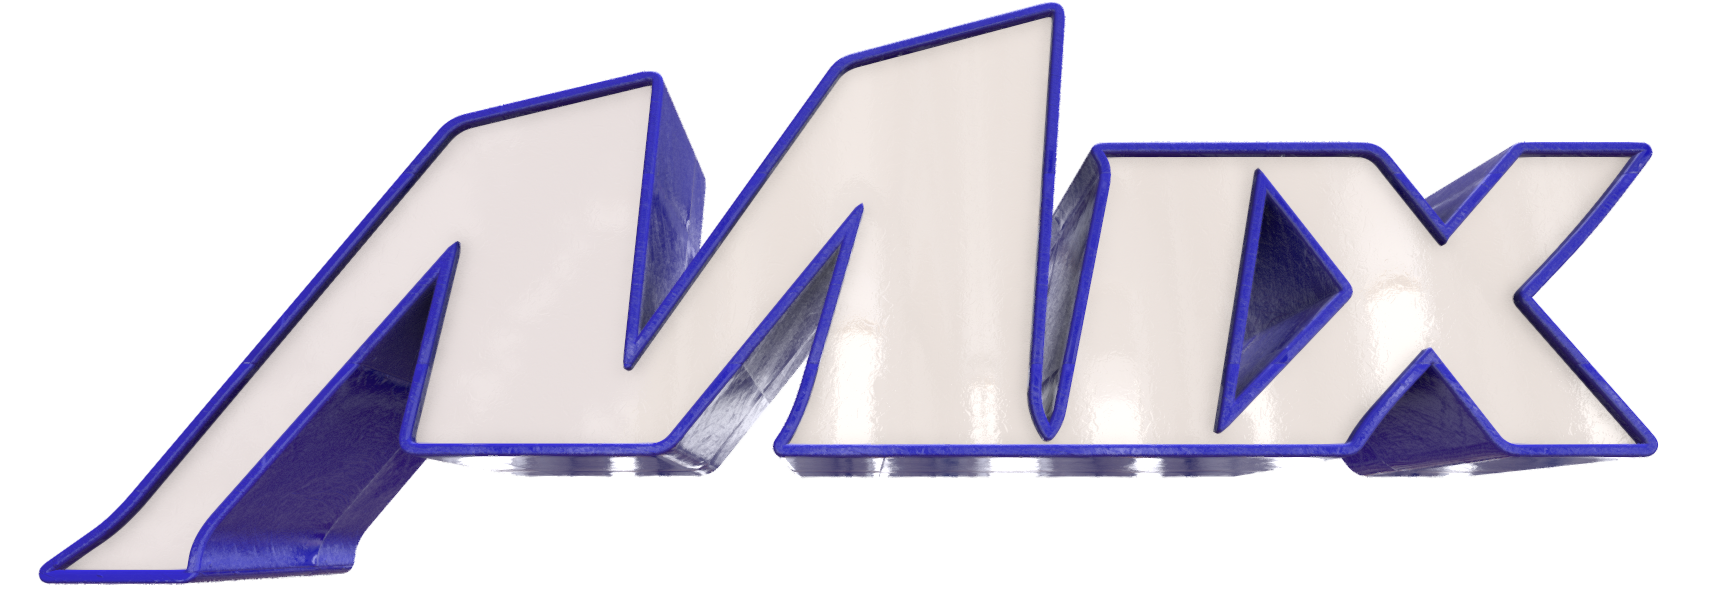 File:Mix 102.7 WCPZ logo.png